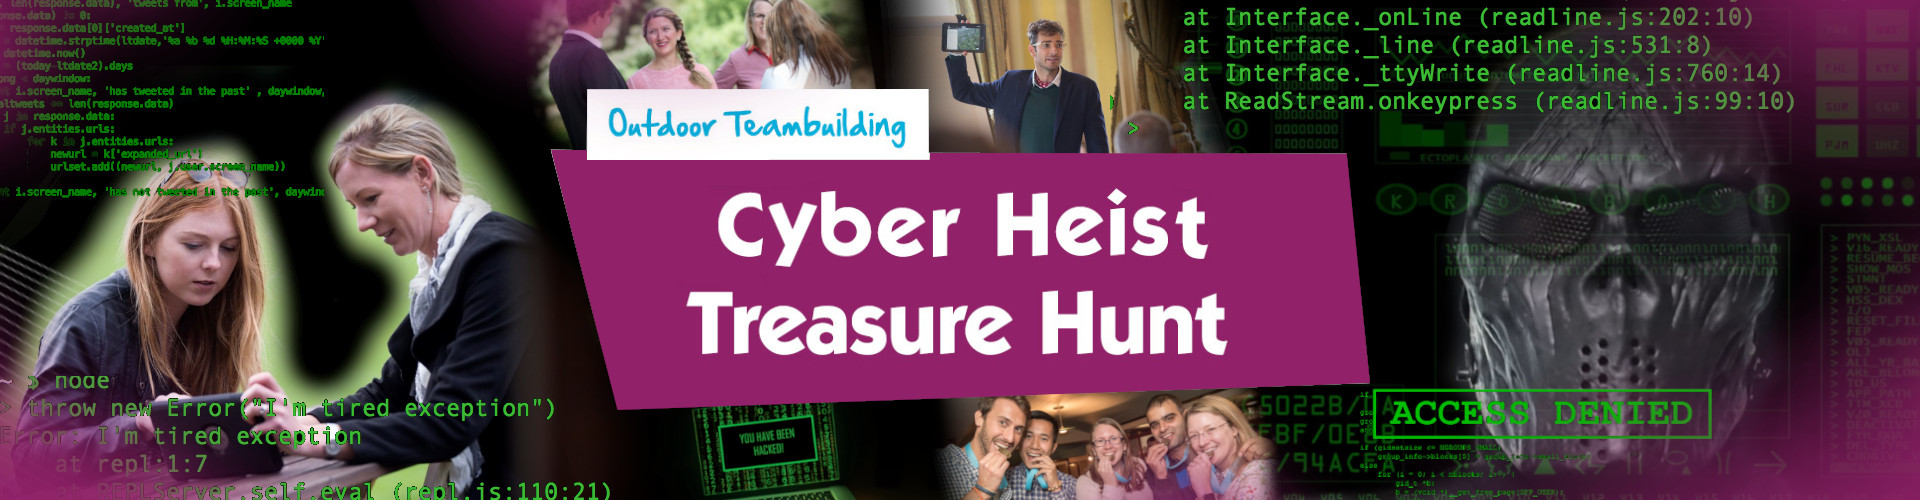 Cyber-heist-treasure-hunt-banner